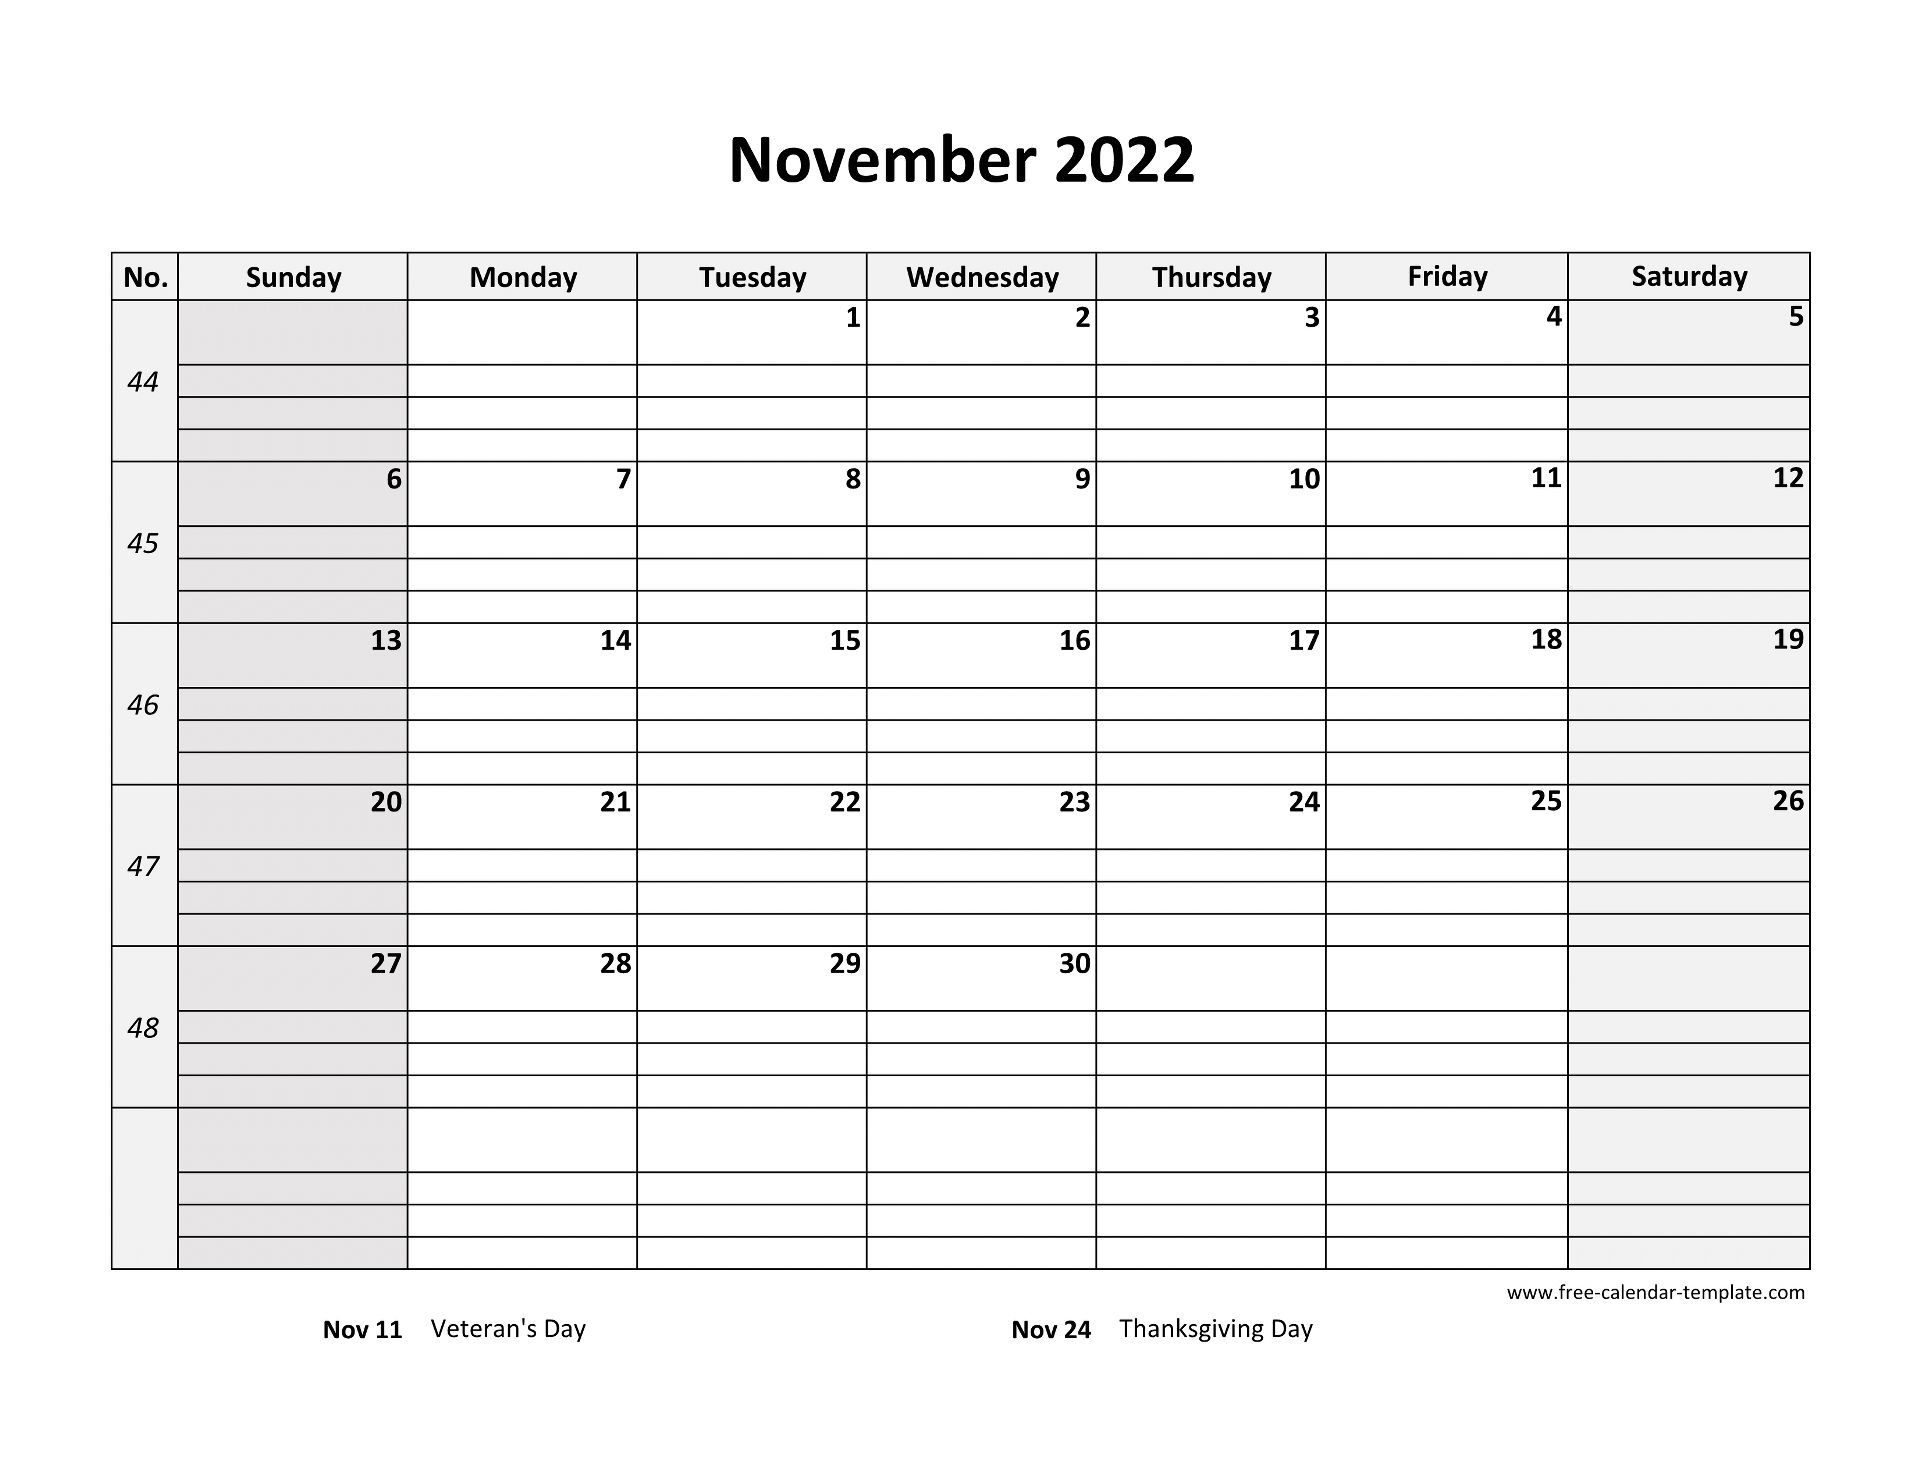 November 2022 Free Calendar Tempplate | Free-Calendar